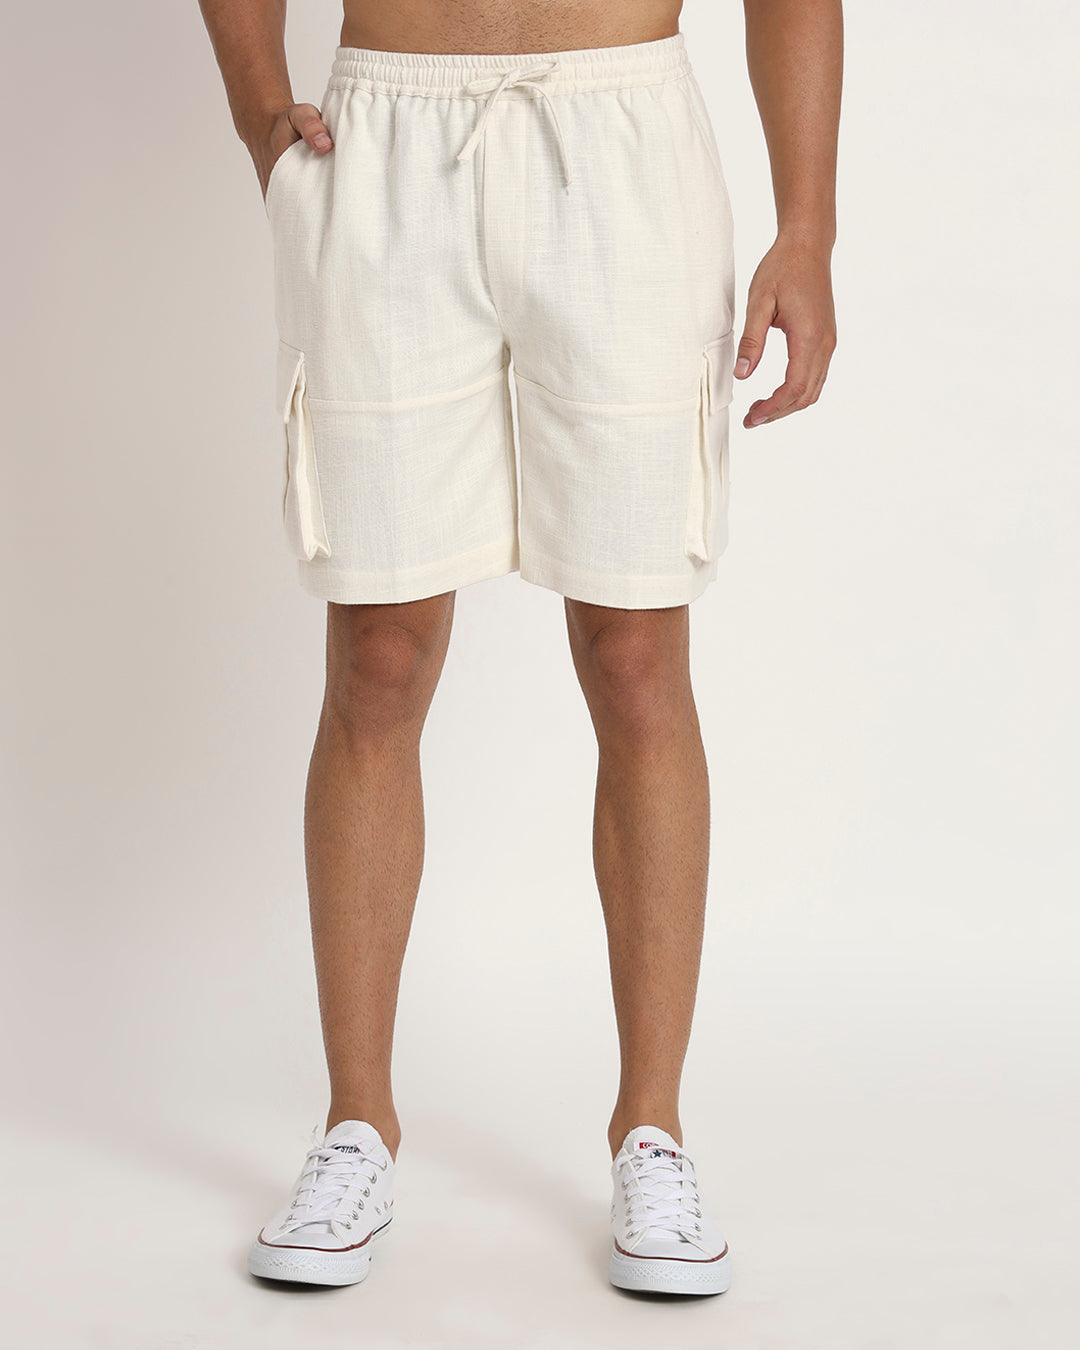 Combo: Classic Iced Grey Half Sleeves Men's Shirt & Cargo Shorts